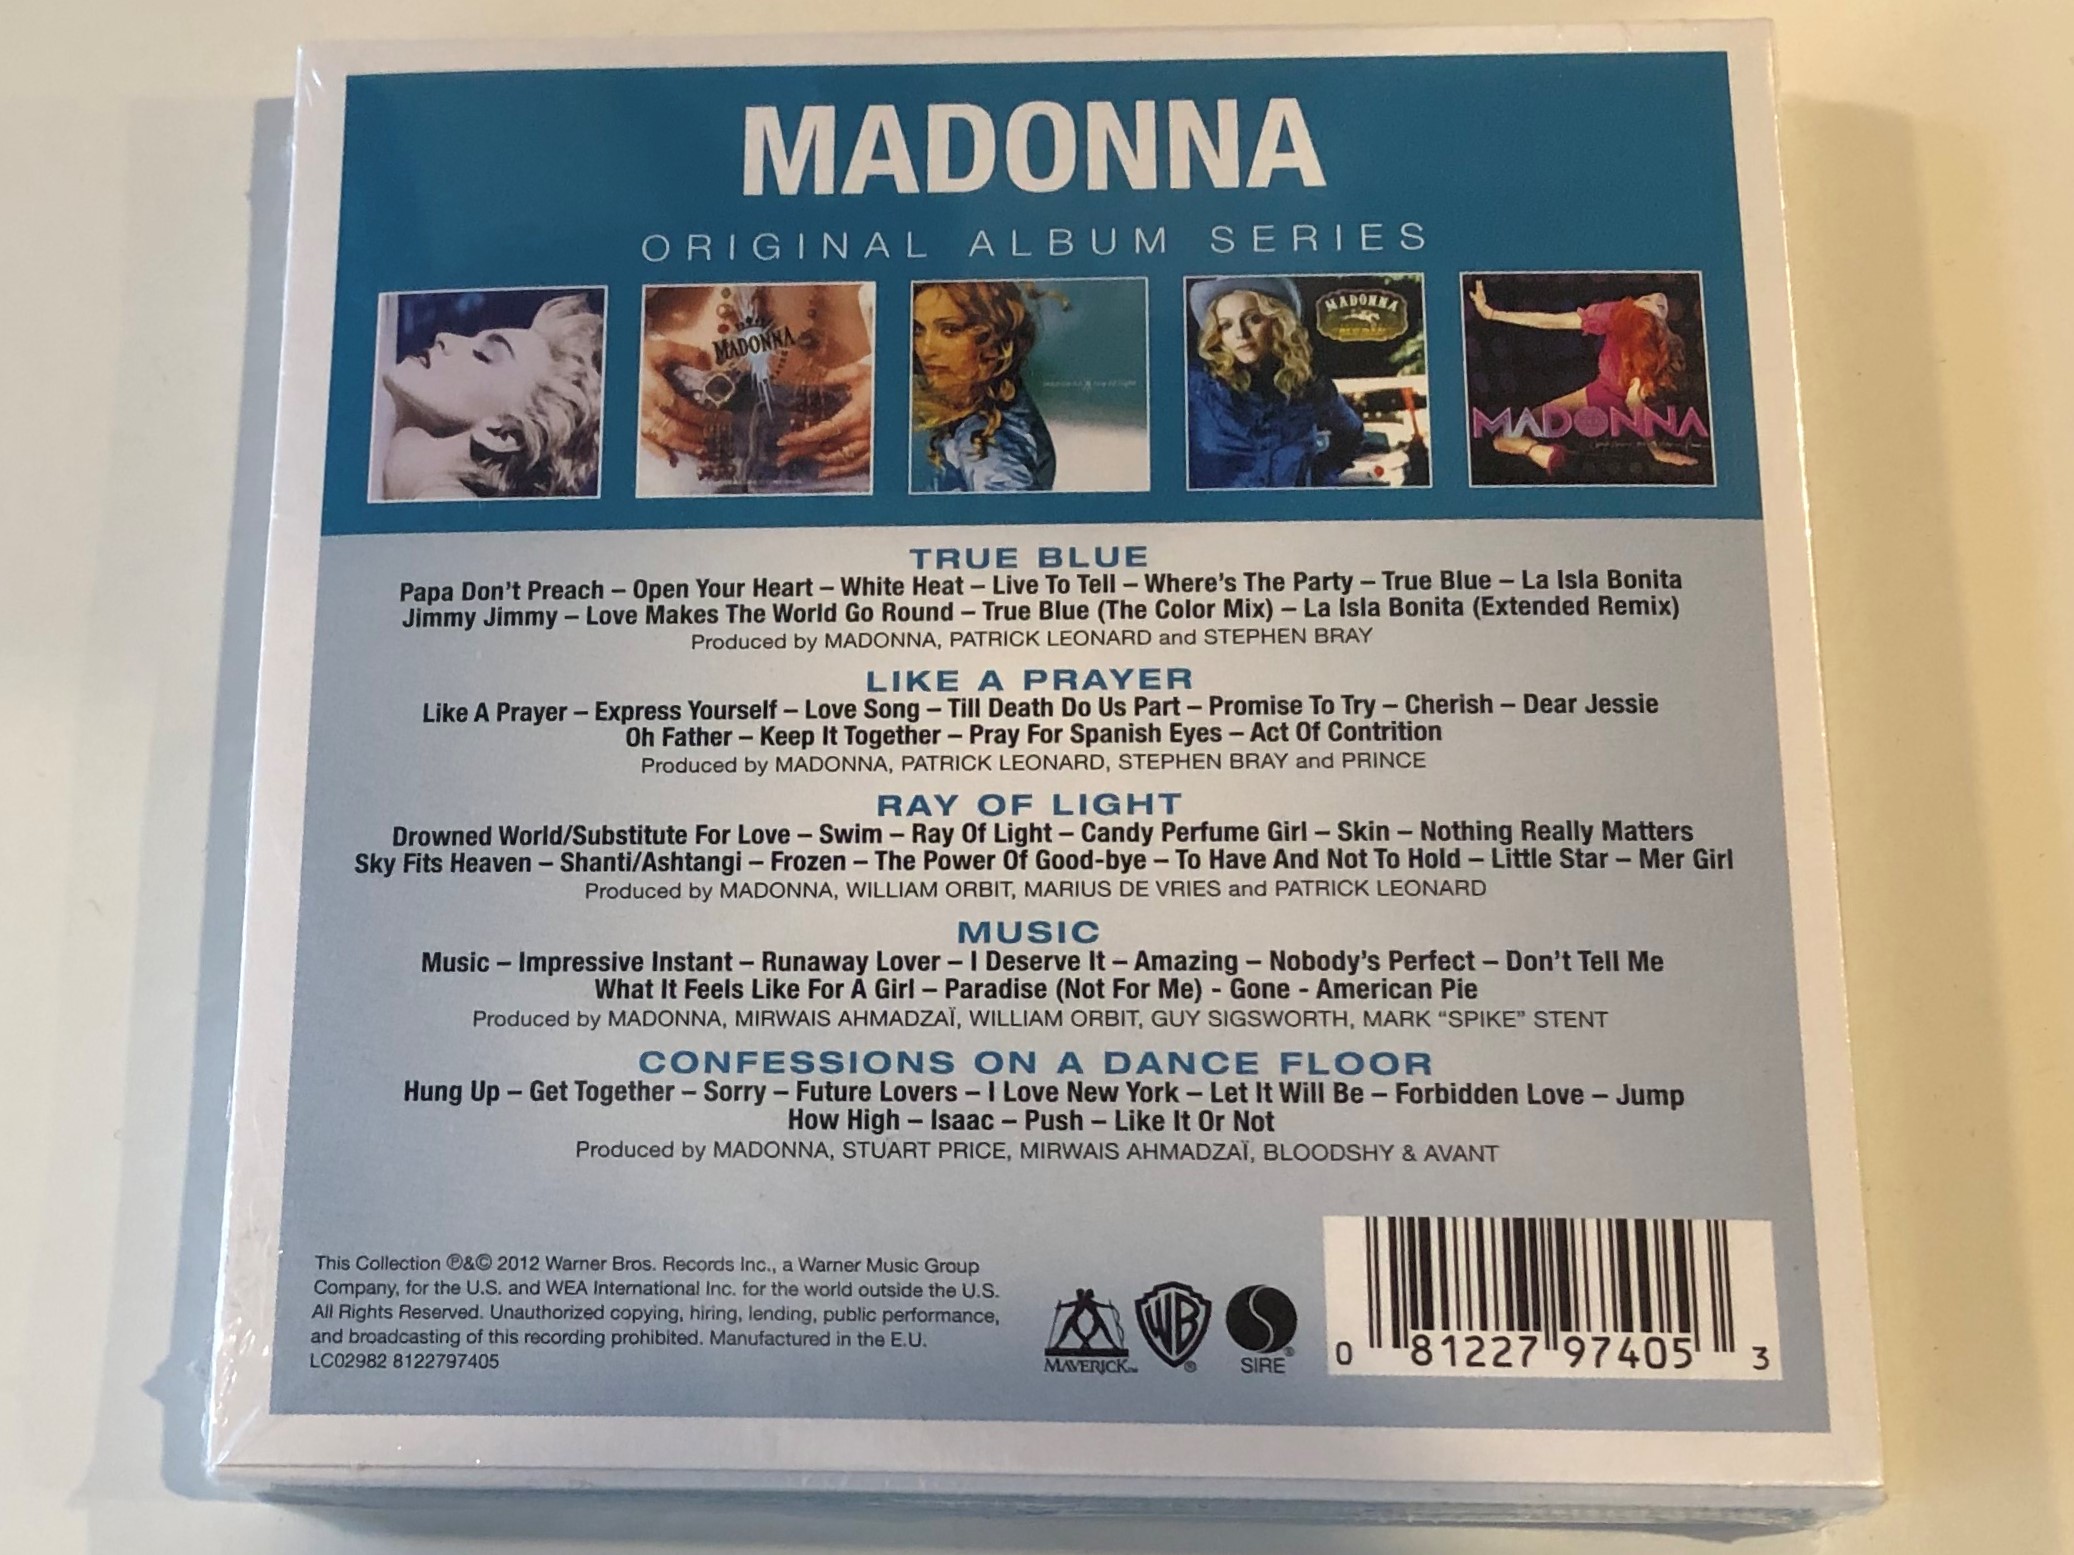 madonna-original-album-series-warner-bros.-records-5x-audio-cd-2012-box-set-8122797405-2-.jpg